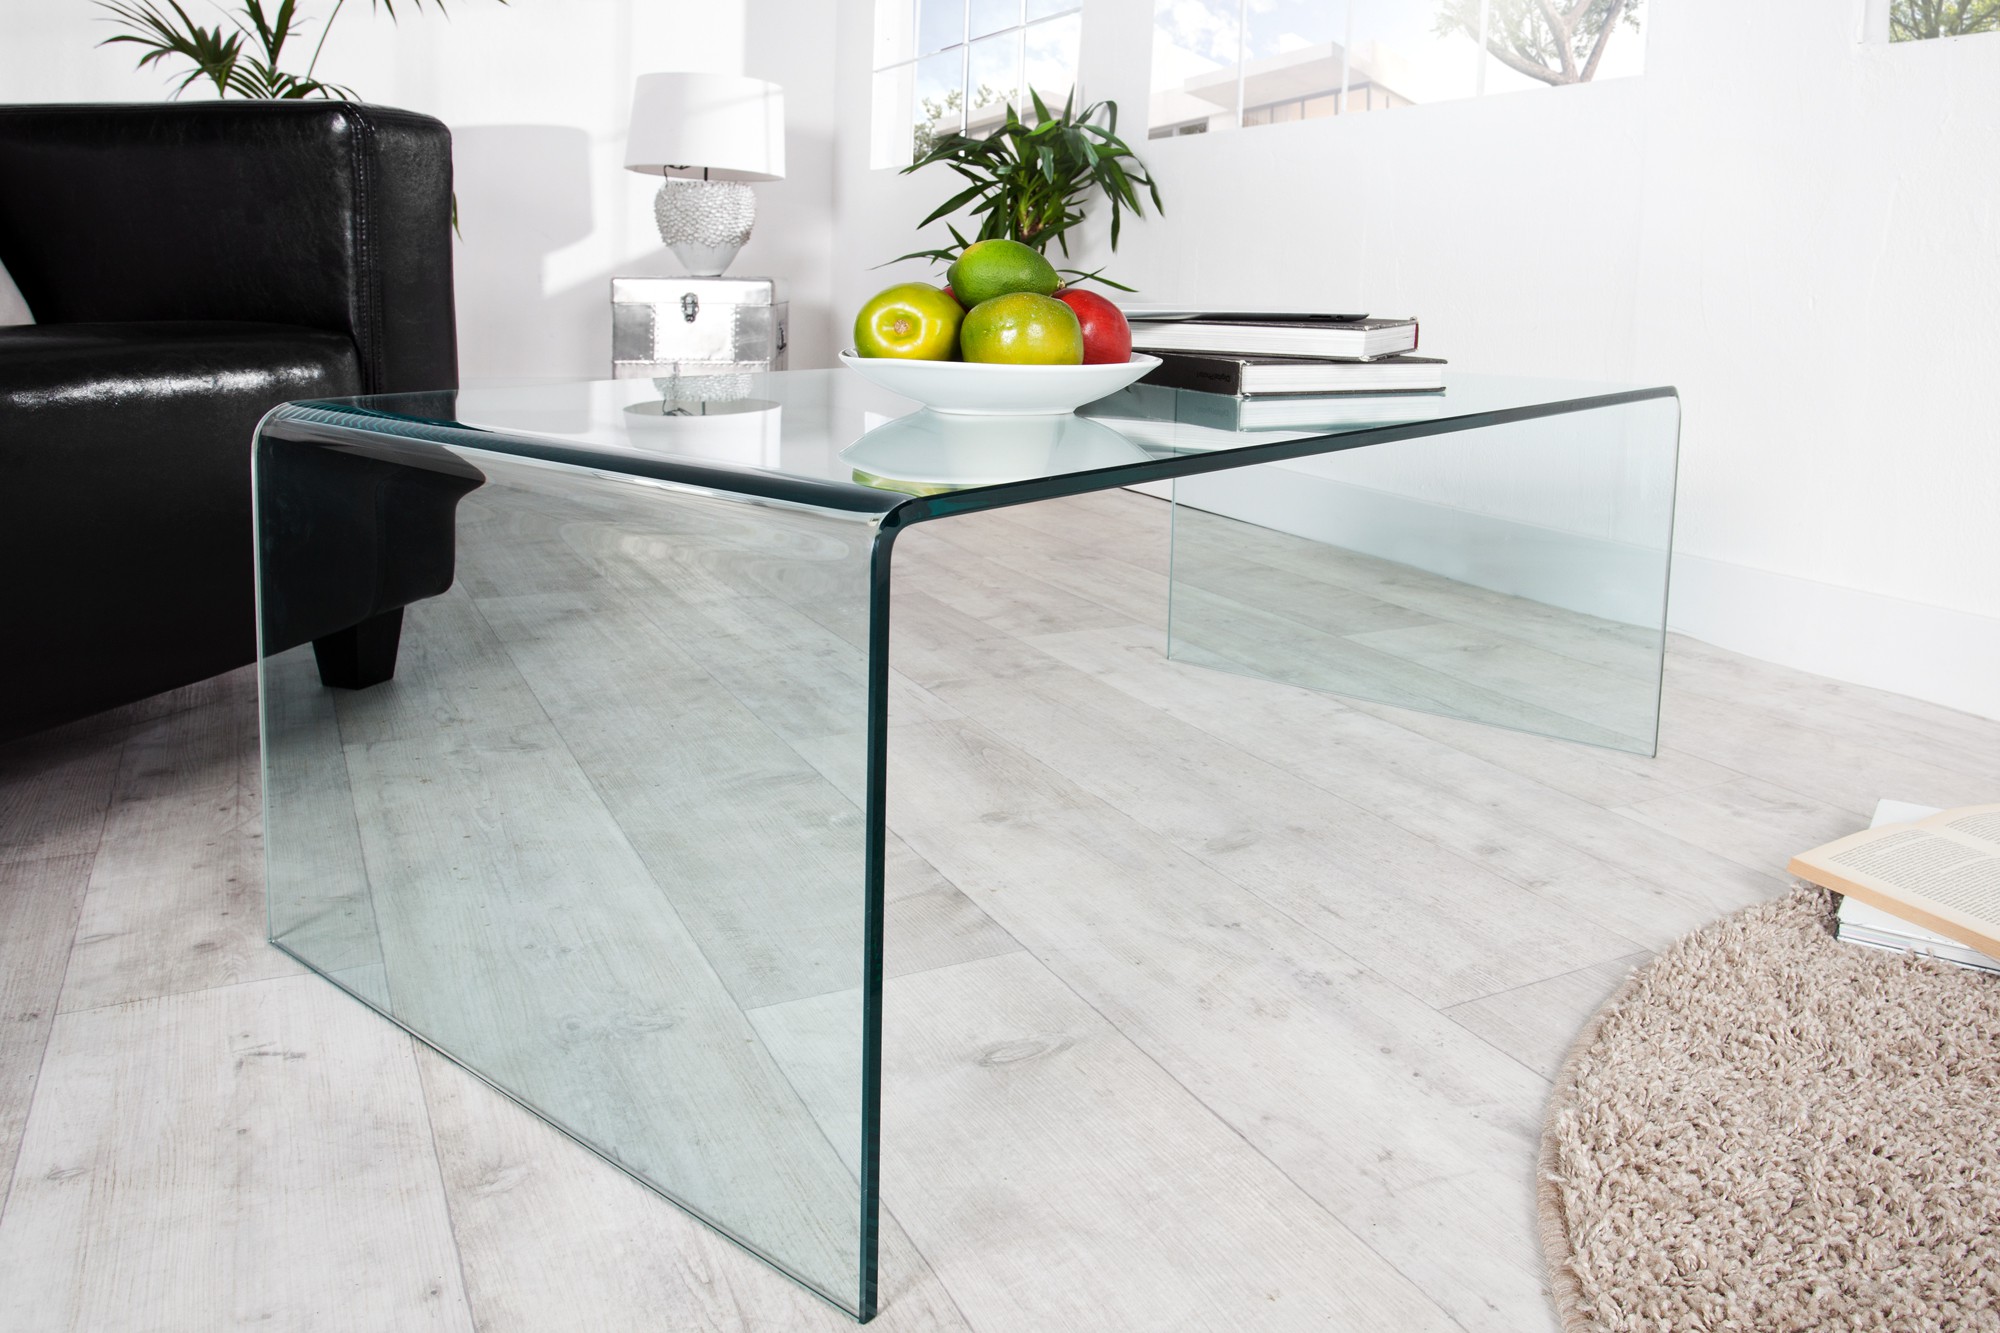 Table basse en verre transparent